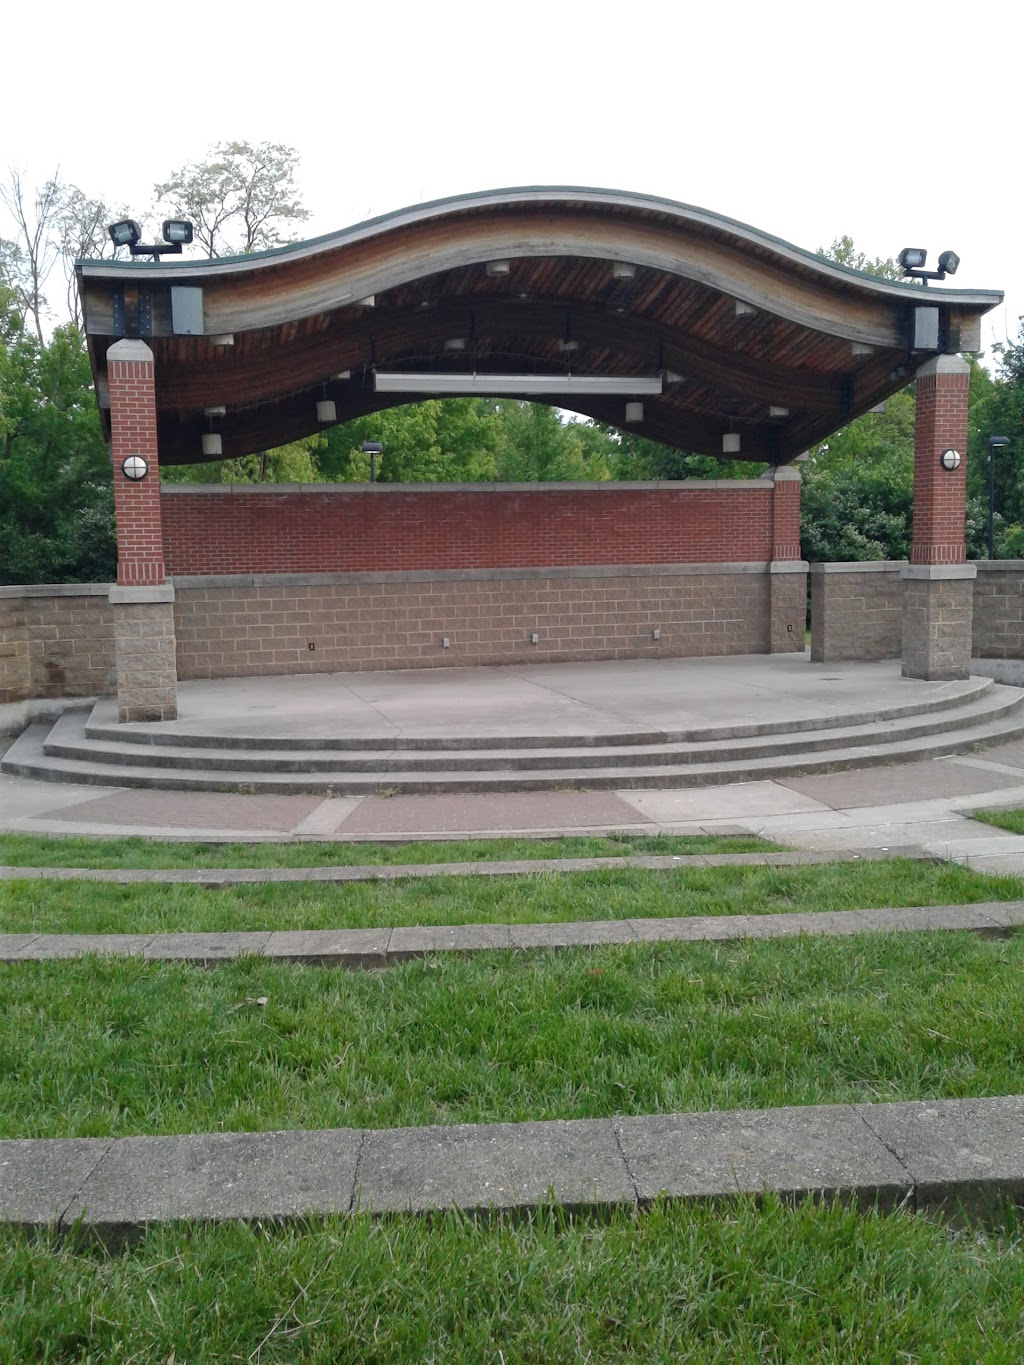 Colerain Township Parks & Services Department | 4725 Springdale Rd, Cincinnati, OH 45251, USA | Phone: (513) 385-7503